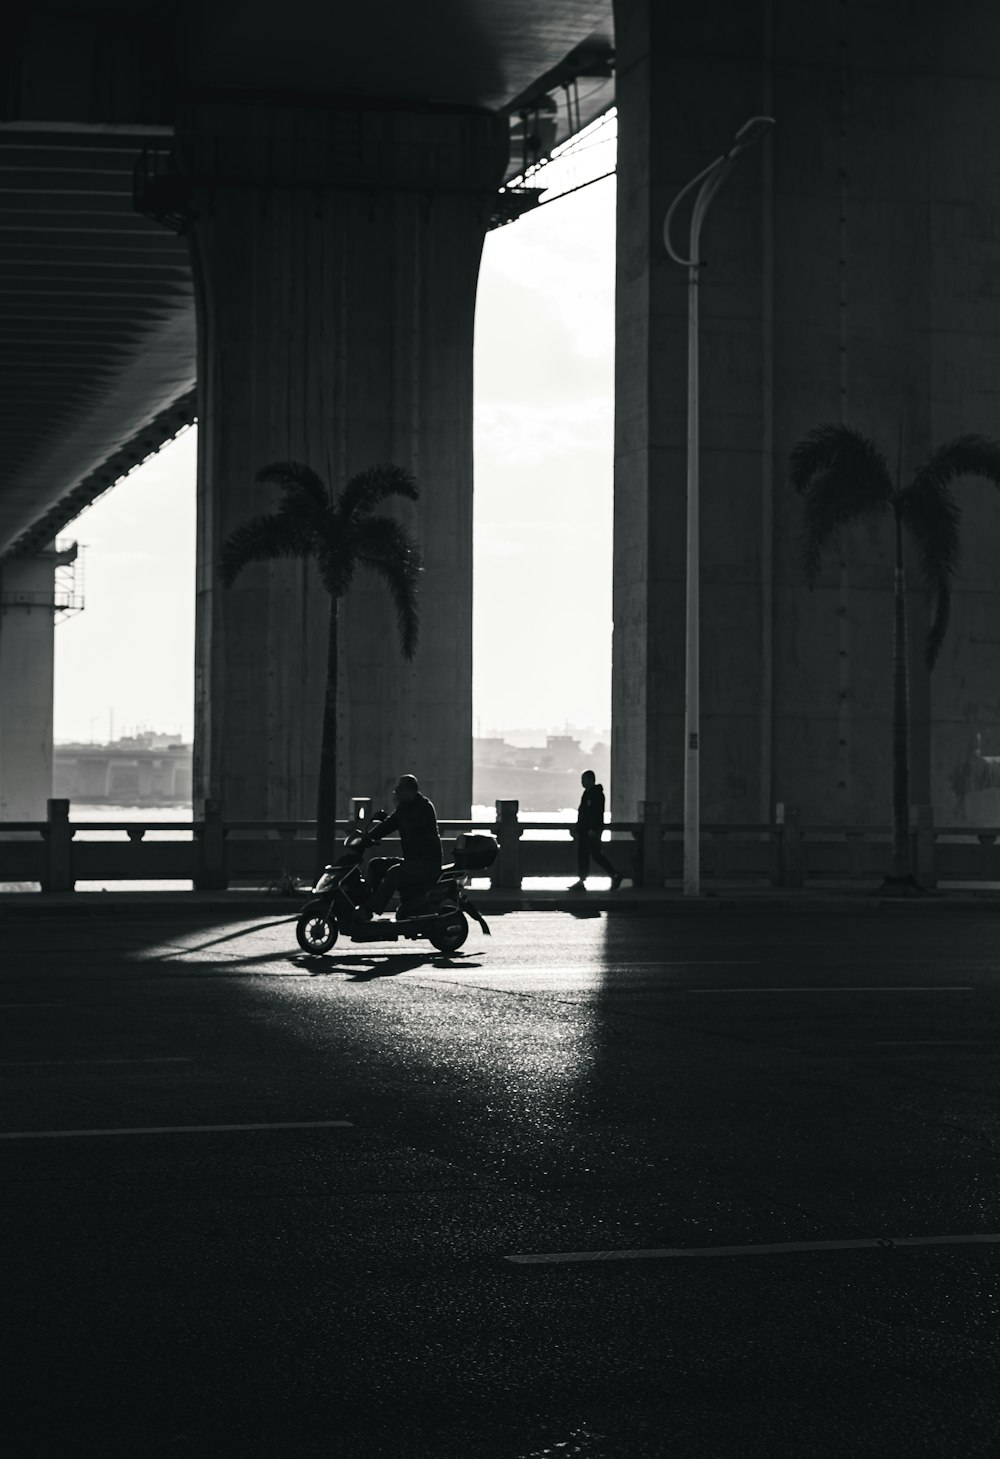 a man riding a motorcycle down a street under a bridge